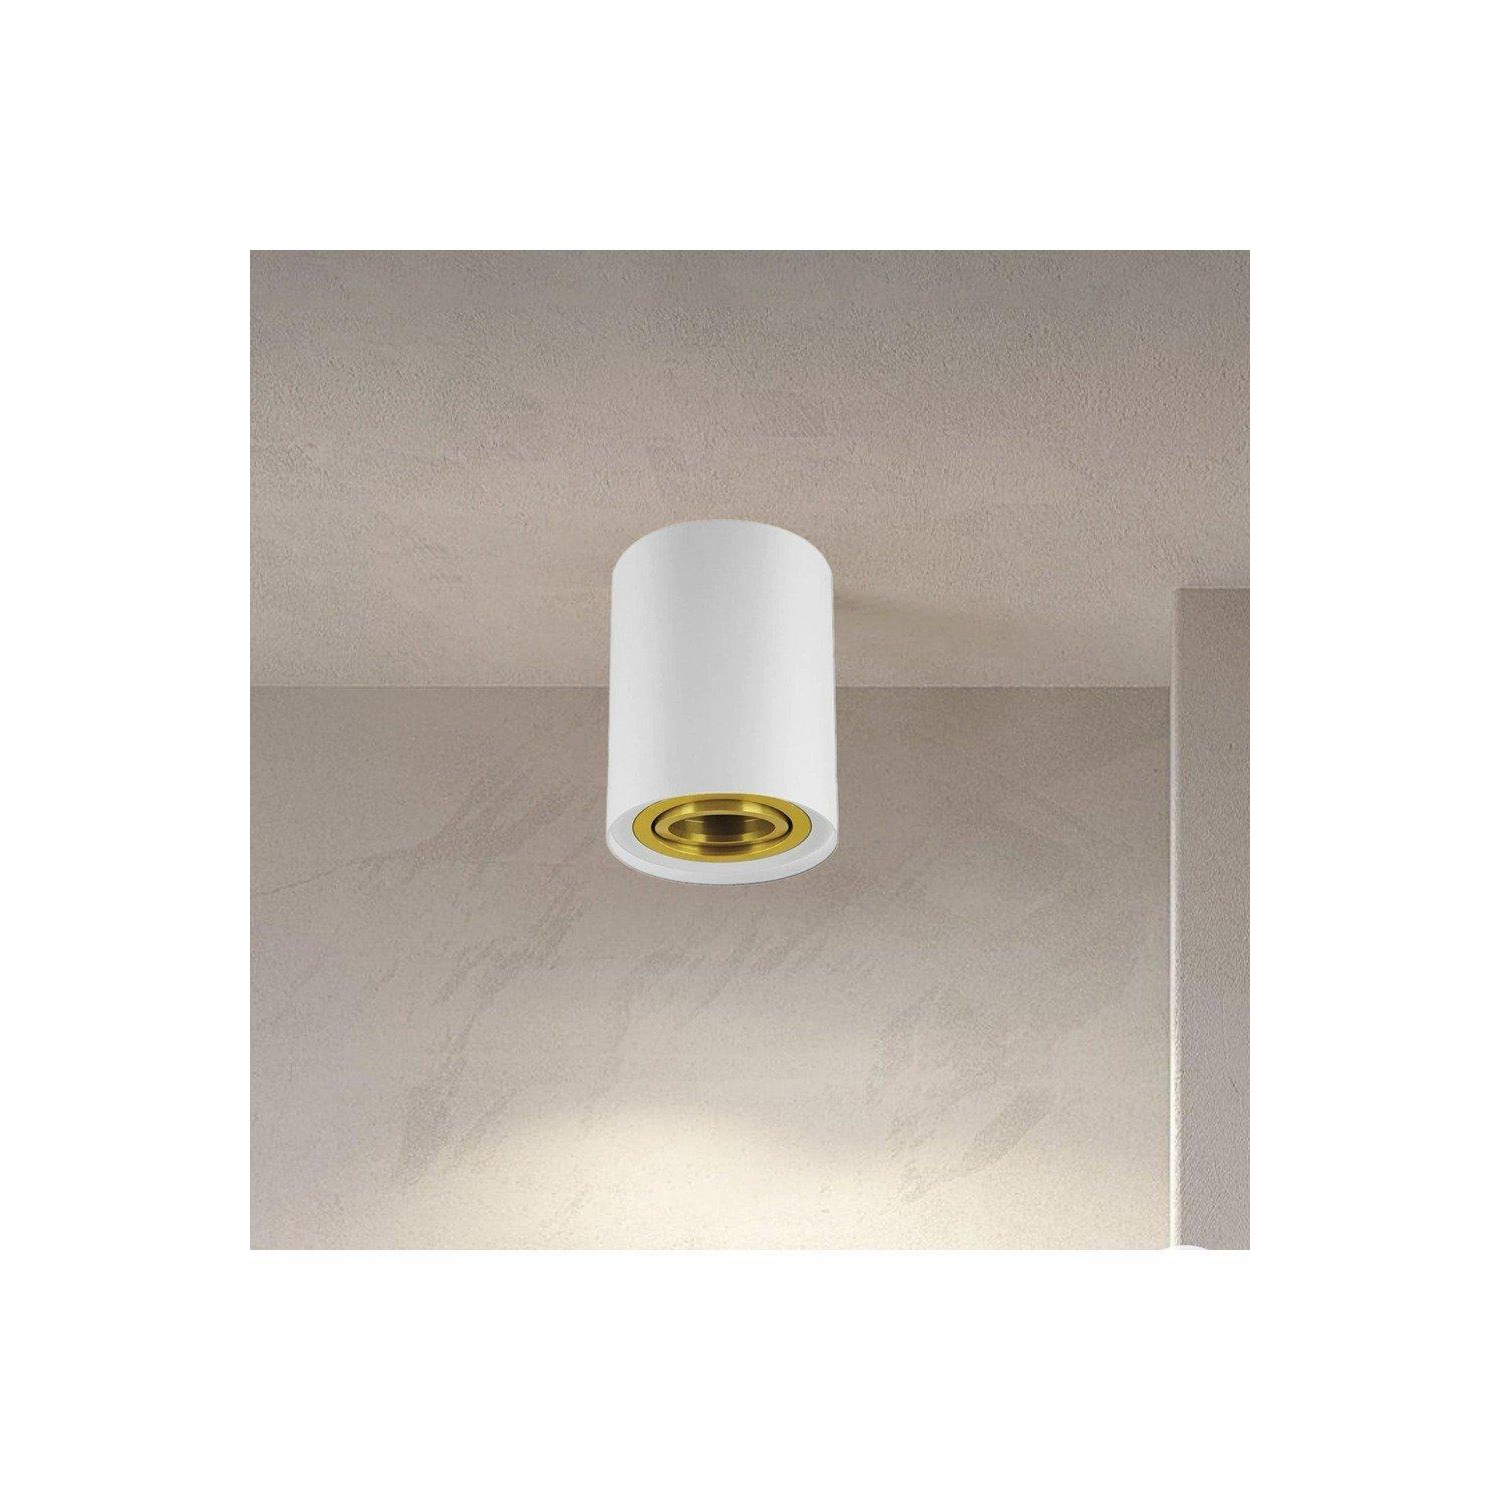 'Prince' White GU10 Adjustable Surface Ceiling Downlight Flush Spot light with Gold Bezel - image 1